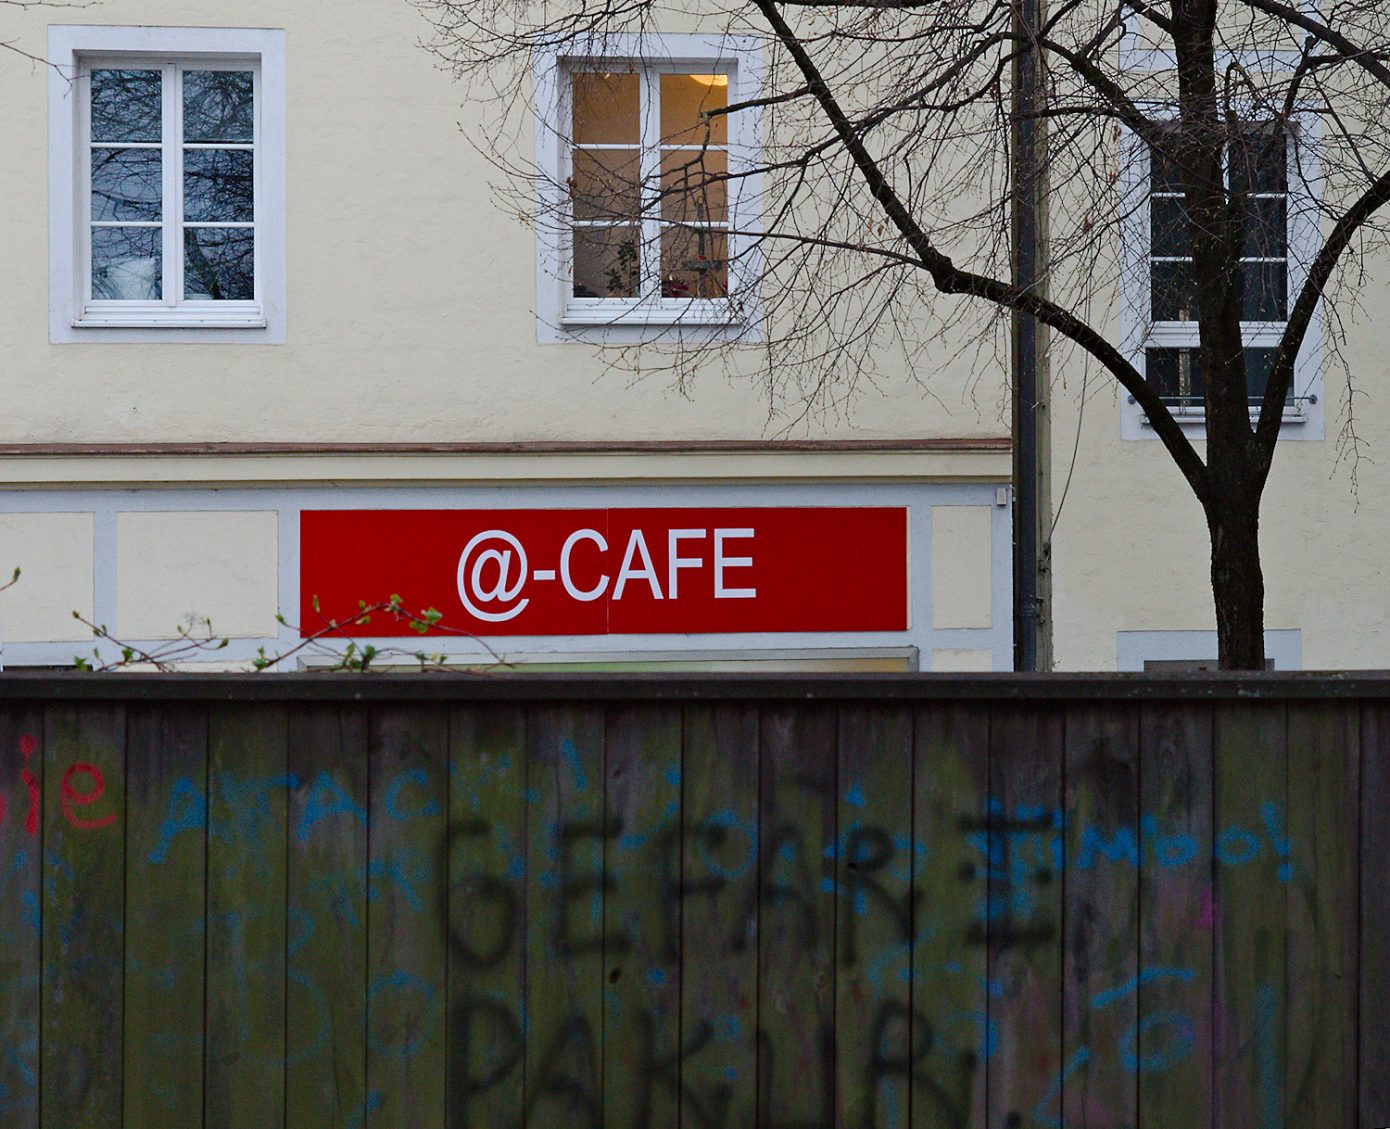 Gefar - Danger. Tagged with Graffiti, Subject, Things, Urban